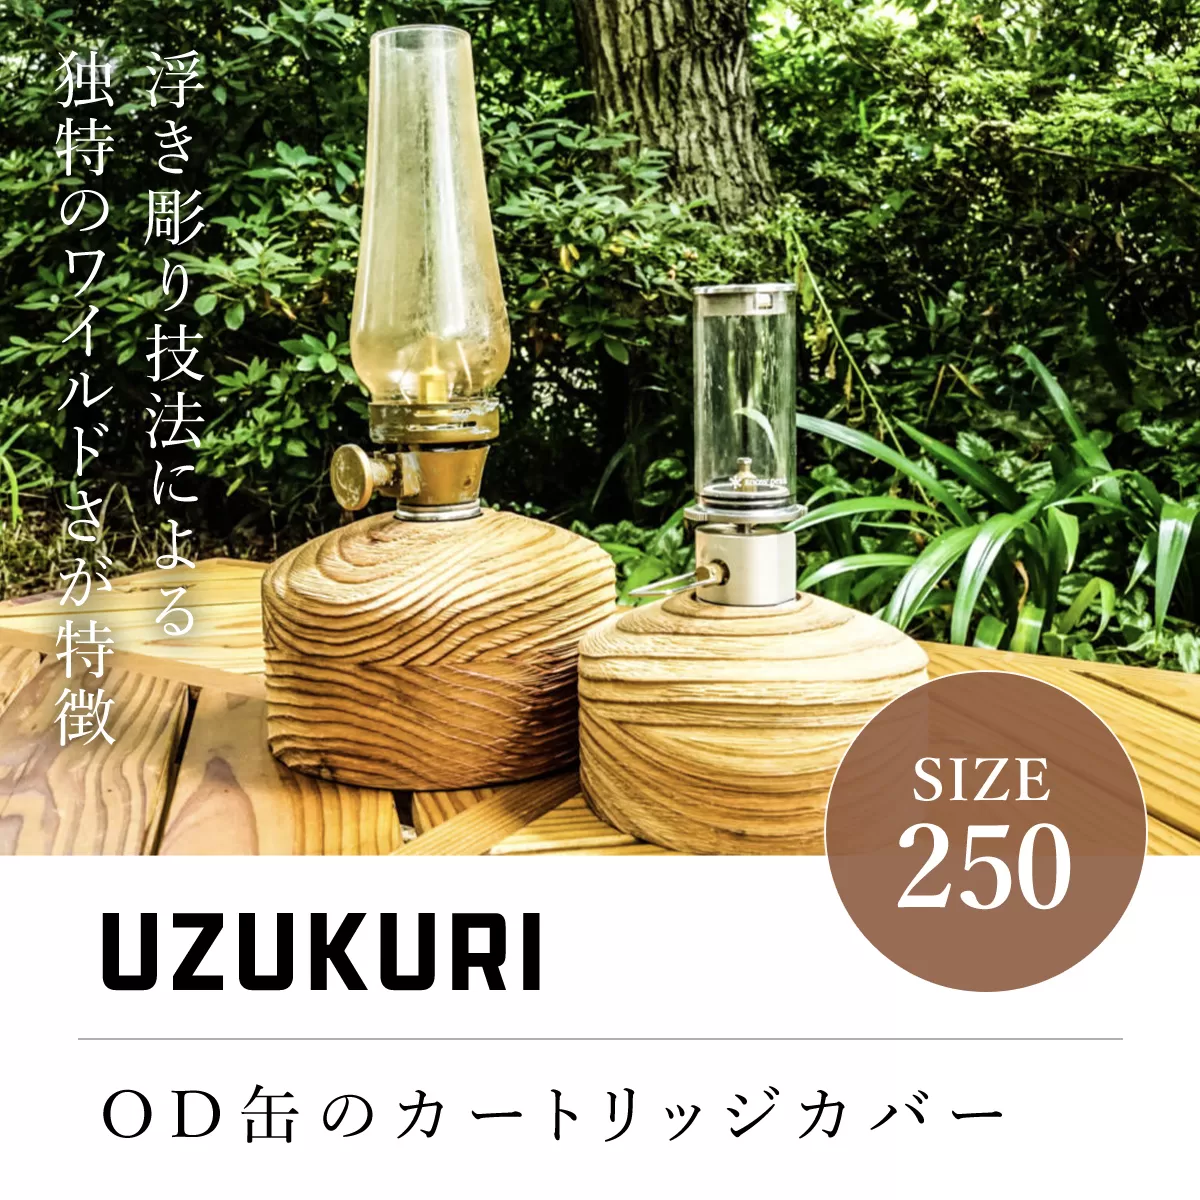 UZUKURI250 SMN005